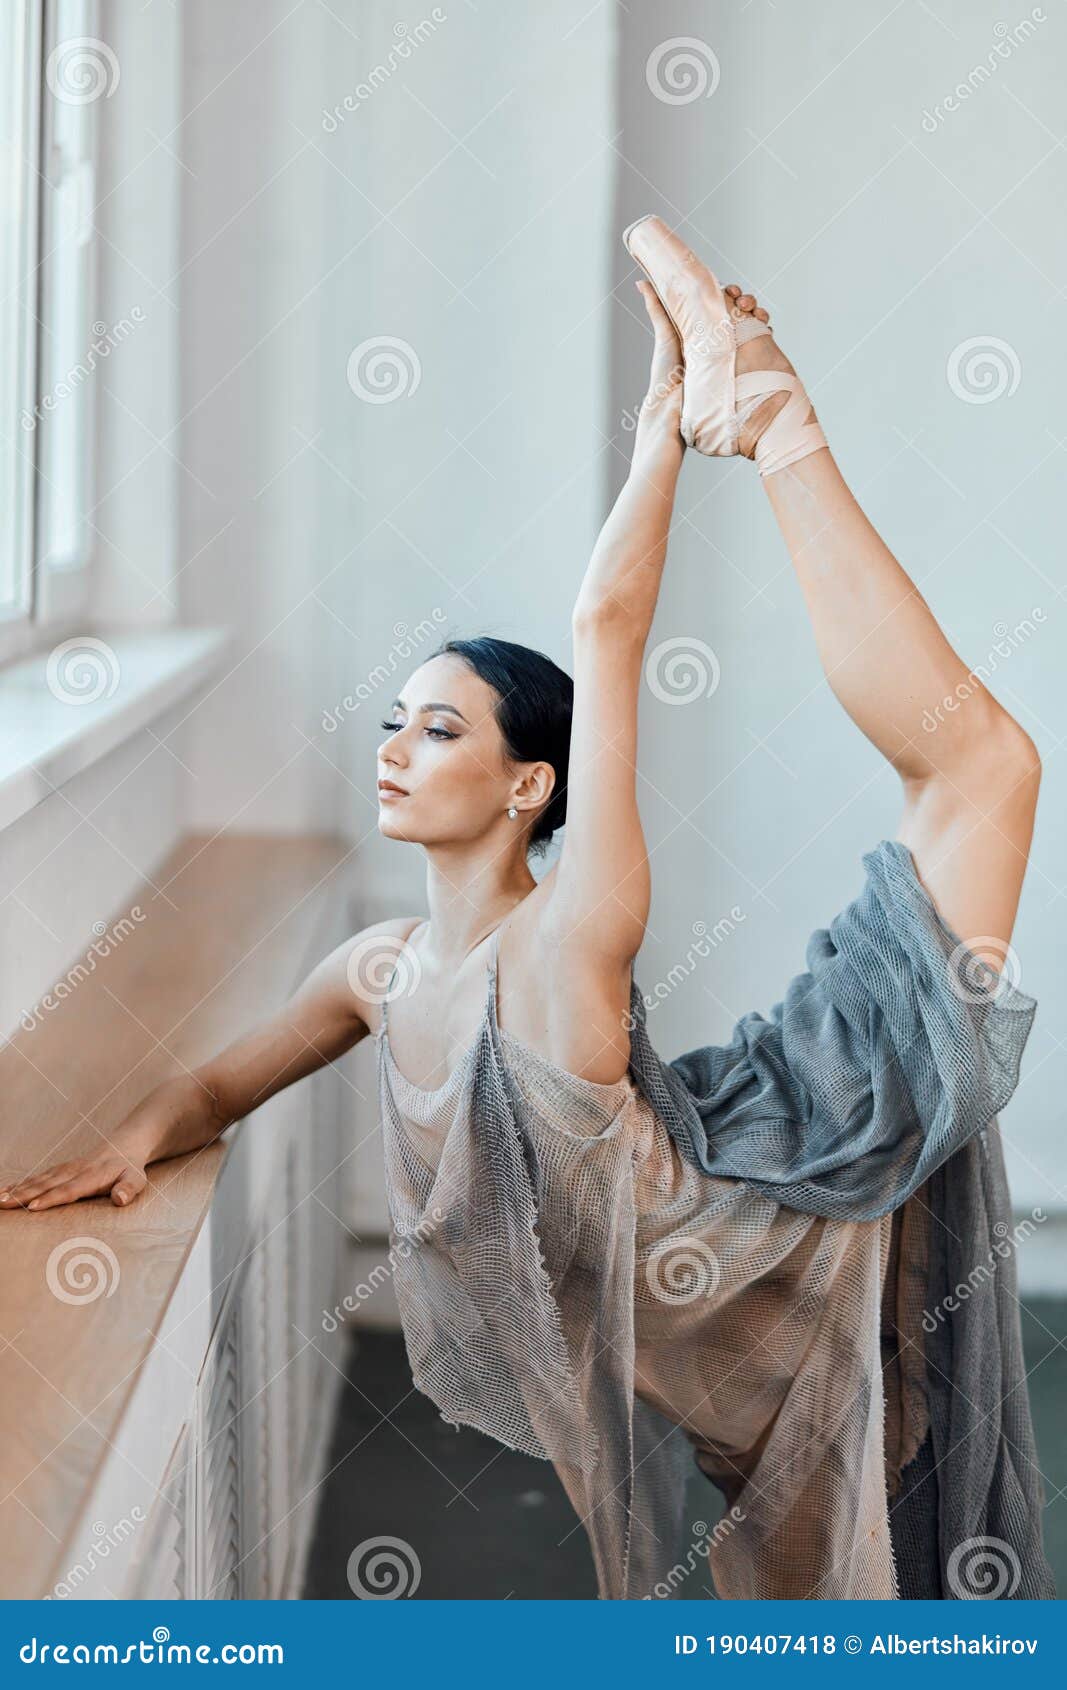 Ballerina Bends Back, Standing on One Leg Doing Stretching, Lifting Leg ...